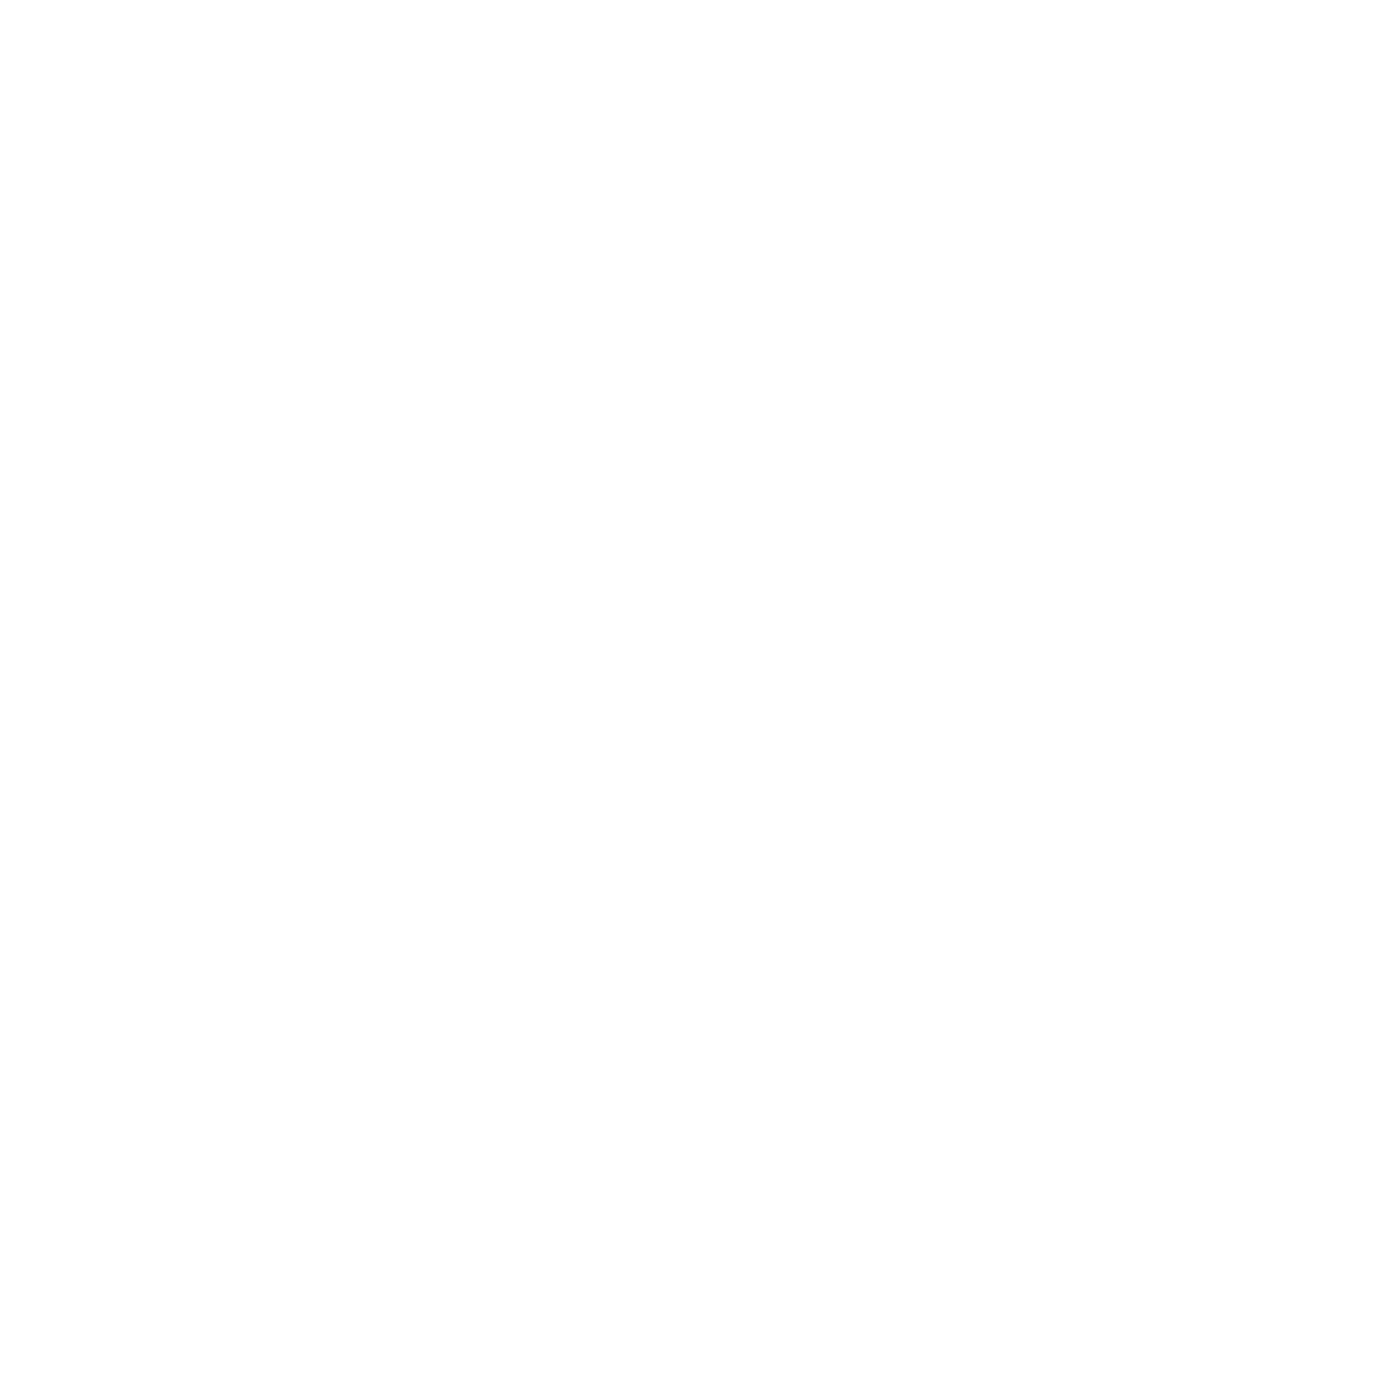 winner99 - HacksawGaming